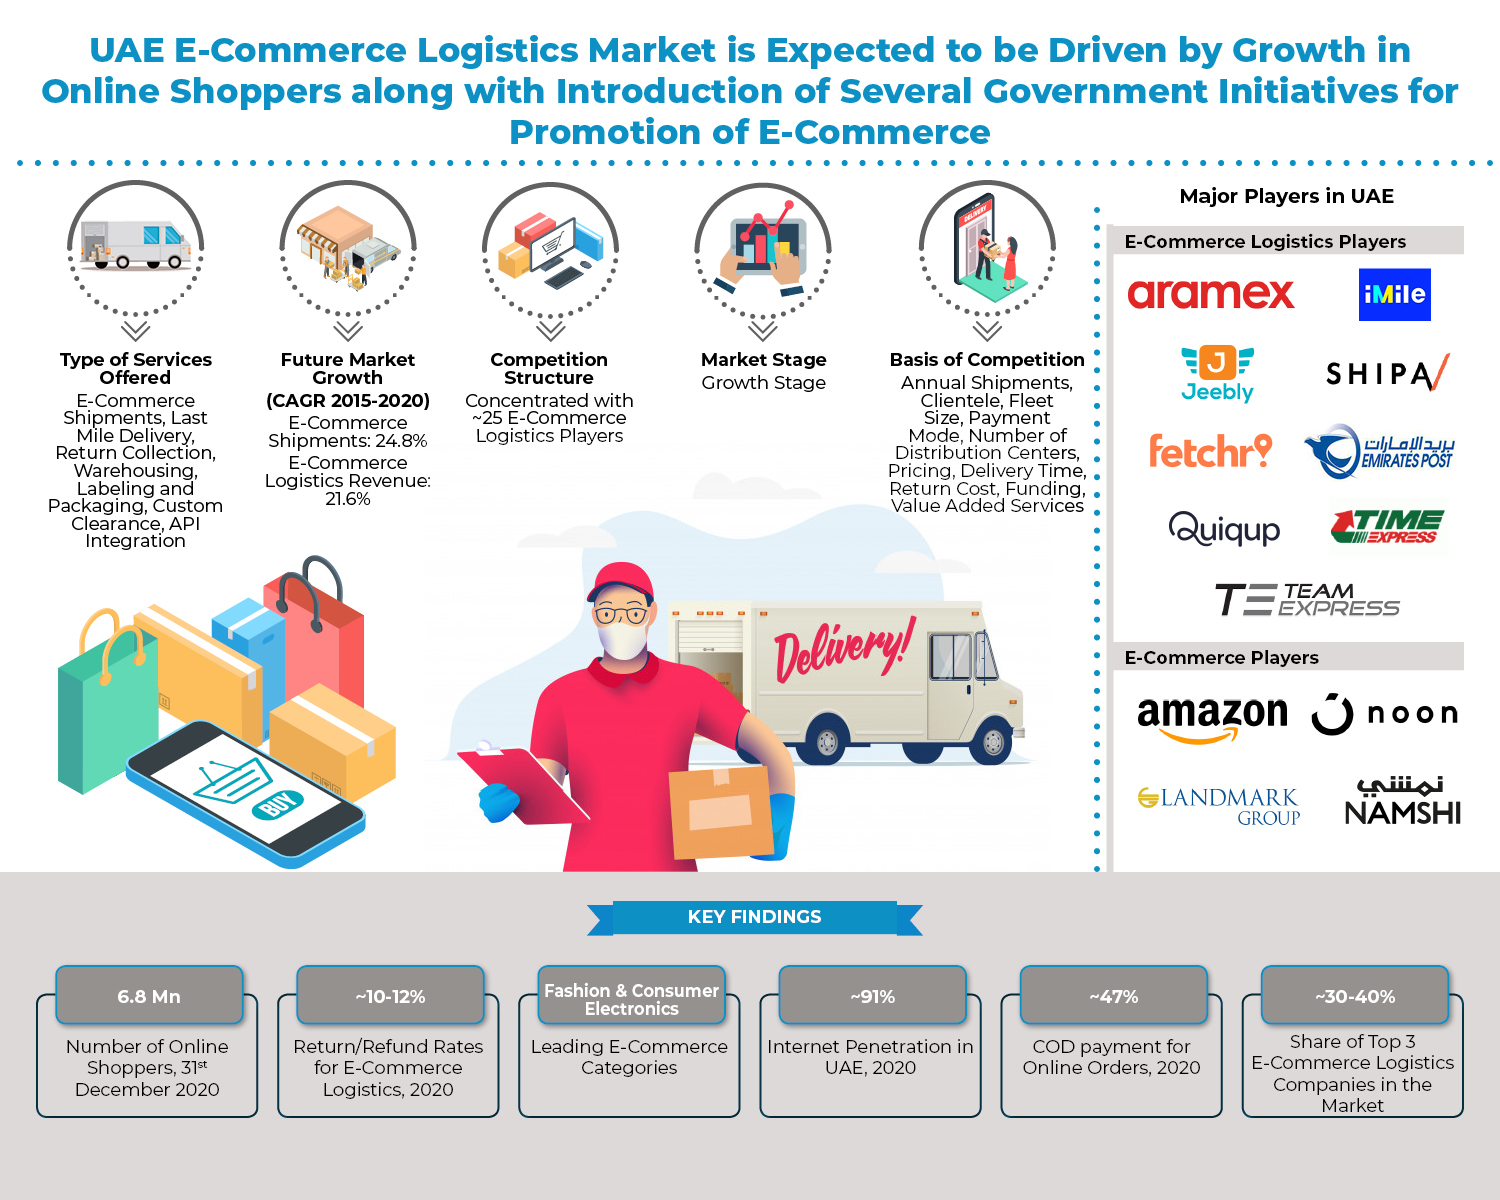 UAE Logistics/Supply Chain Industry